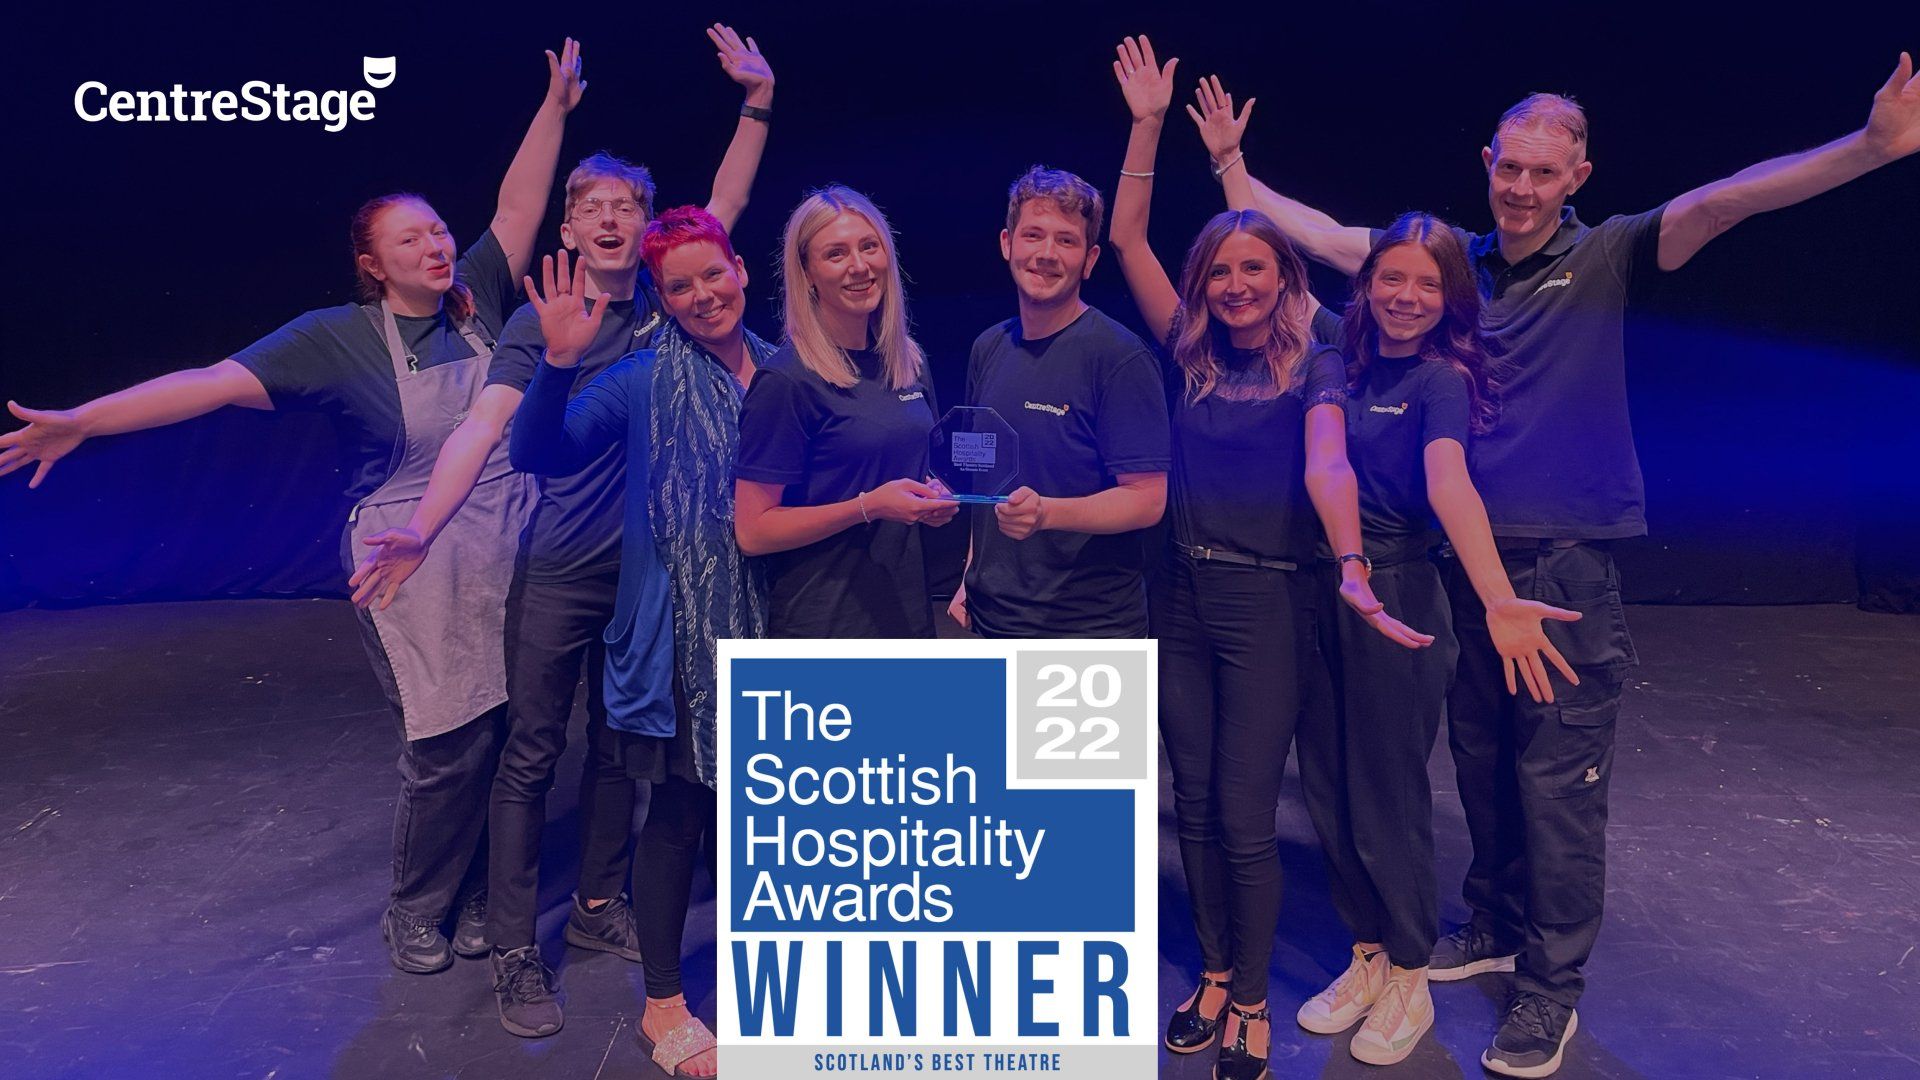 CentreStage, The Scottish Hospitality Awards 2022 'Scotland's Best Theatre' Winner